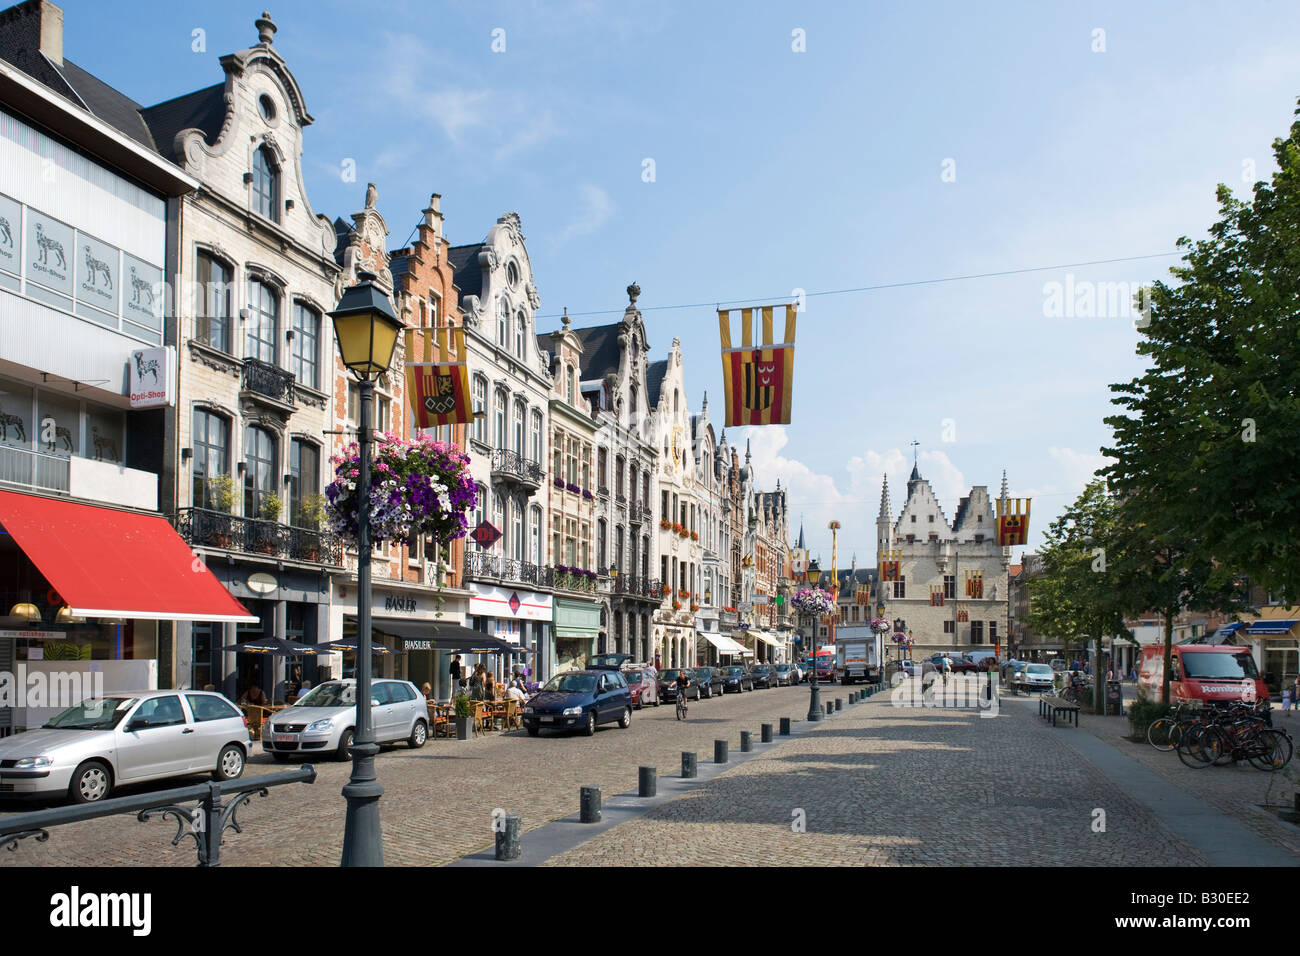 Negozi su Ijzerenleen nel centro della città vecchia, Mechelen, Belgio Foto Stock